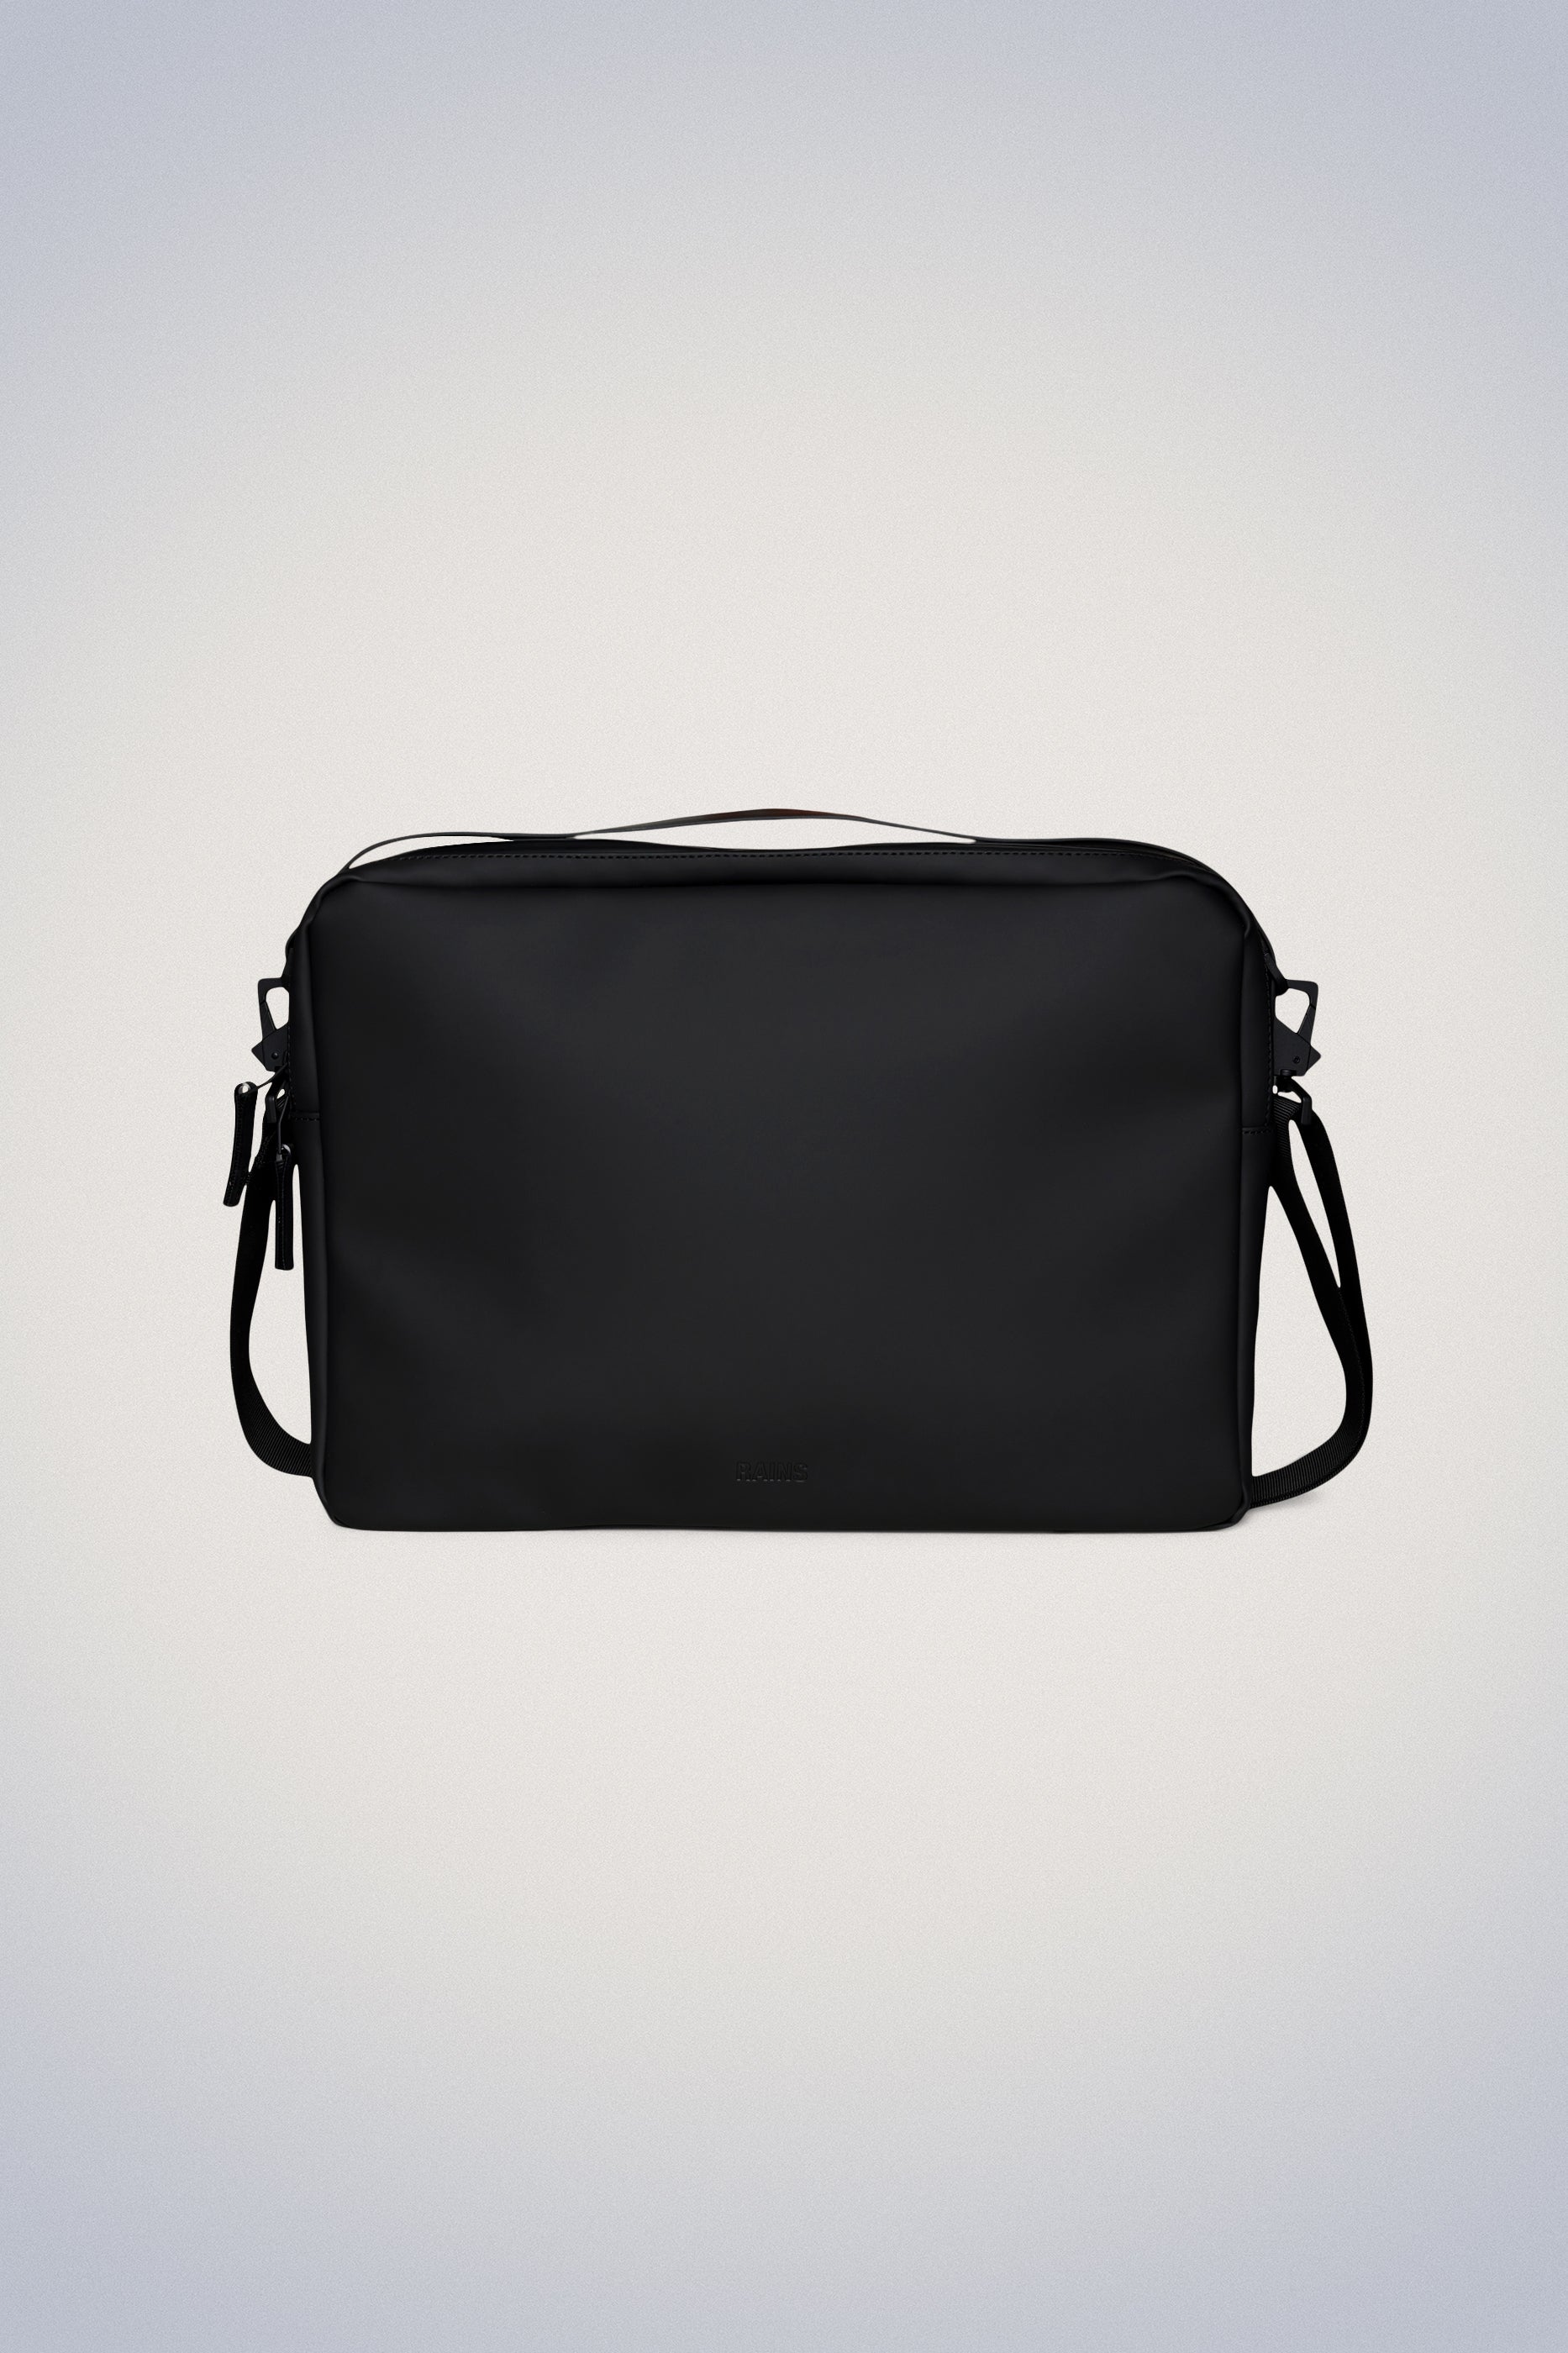 Buy TGK Laptop Bag Sleeve Bag Carrying Case Cover Pouch Waterproof Laptop  Messenger Hand Bag for 15